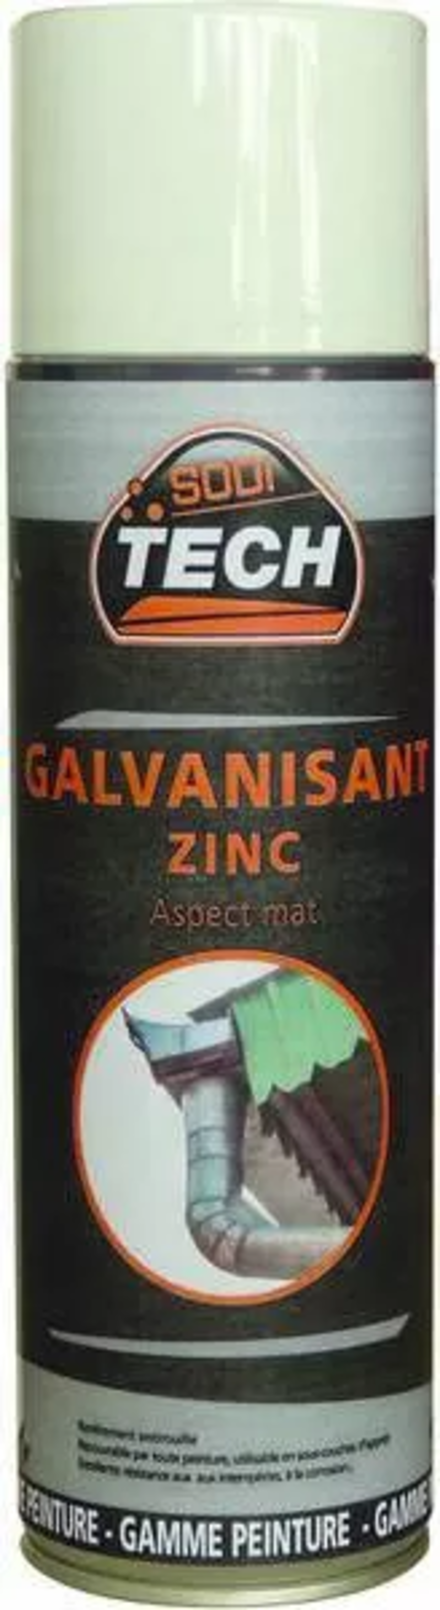 Lot 12x10150 galvanisant zinc mat - 1015012